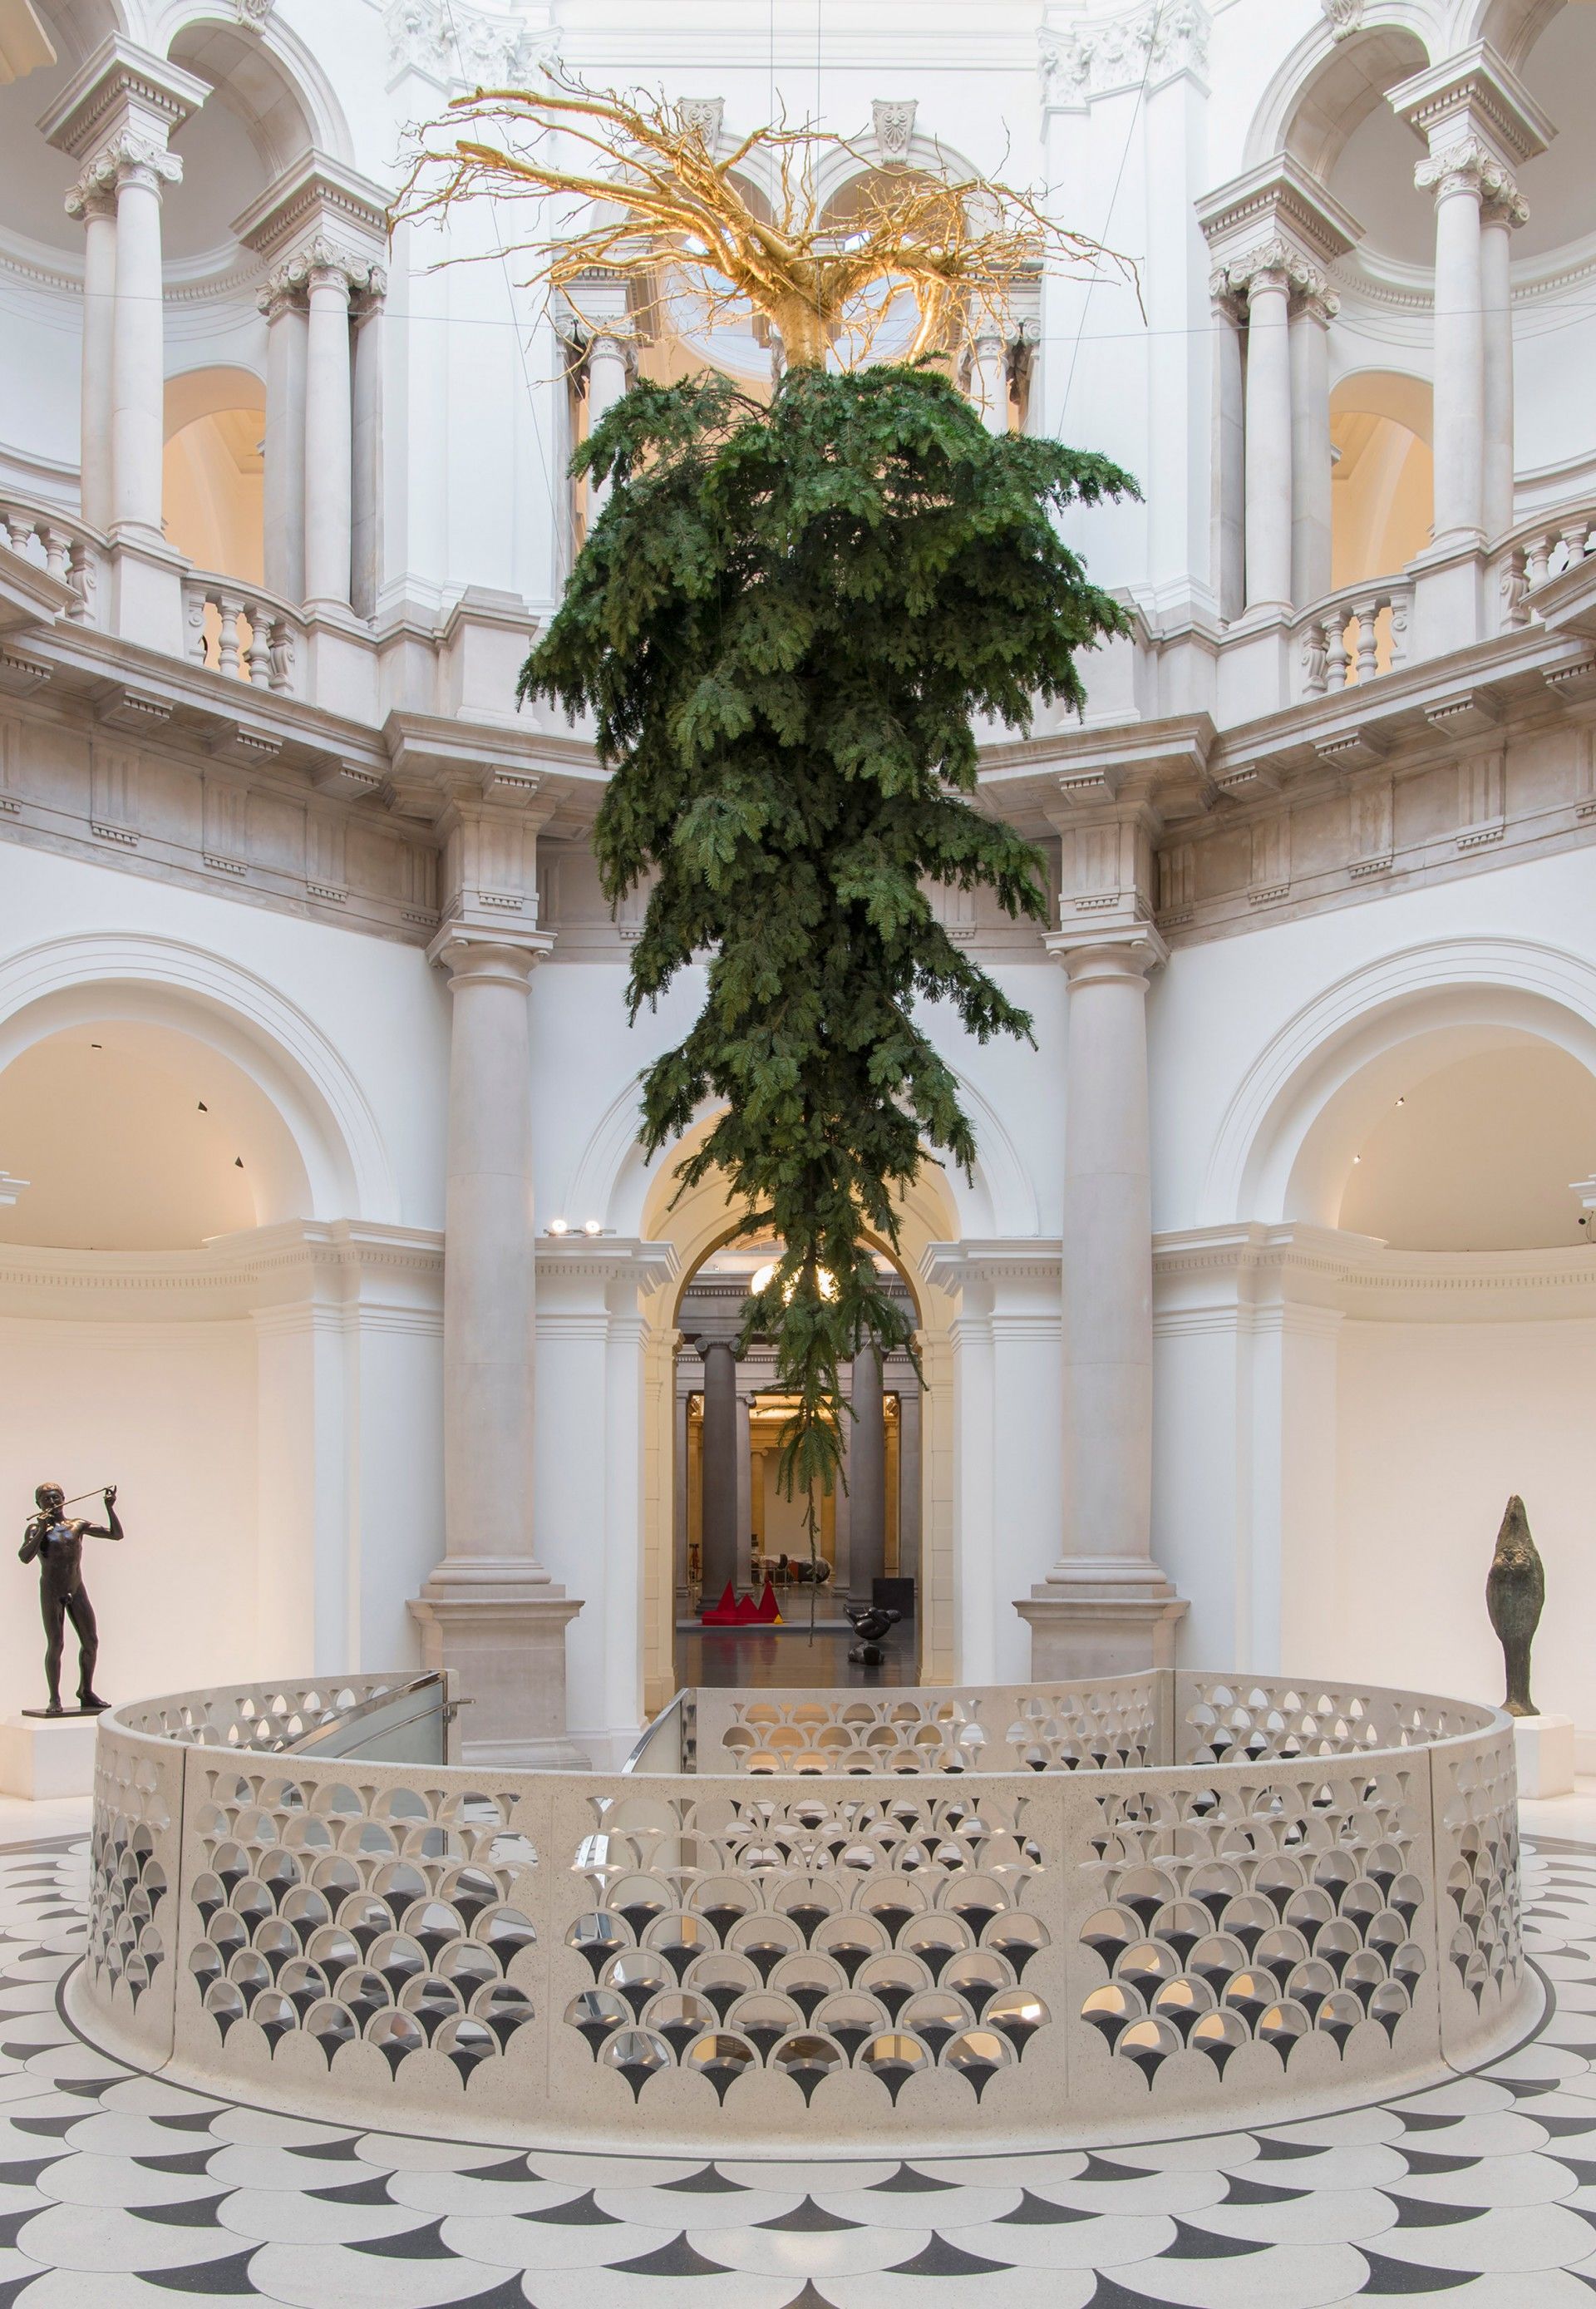 The Tate Britain Christmas Tree, by artist Shirazeh Houshiary